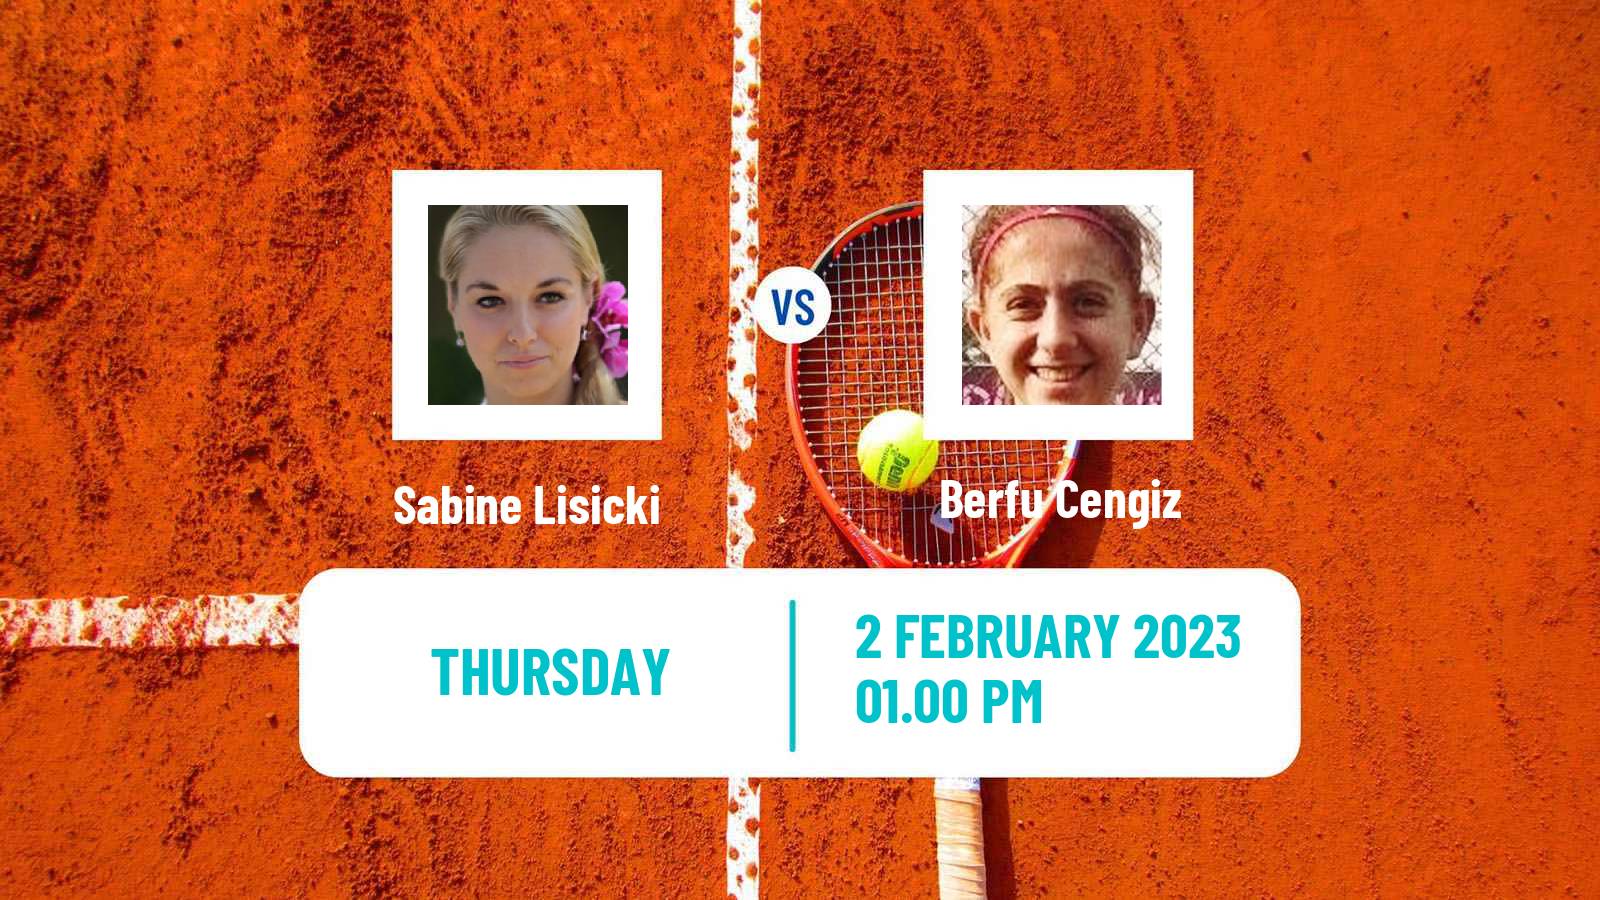 Tennis ITF Tournaments Sabine Lisicki - Berfu Cengiz